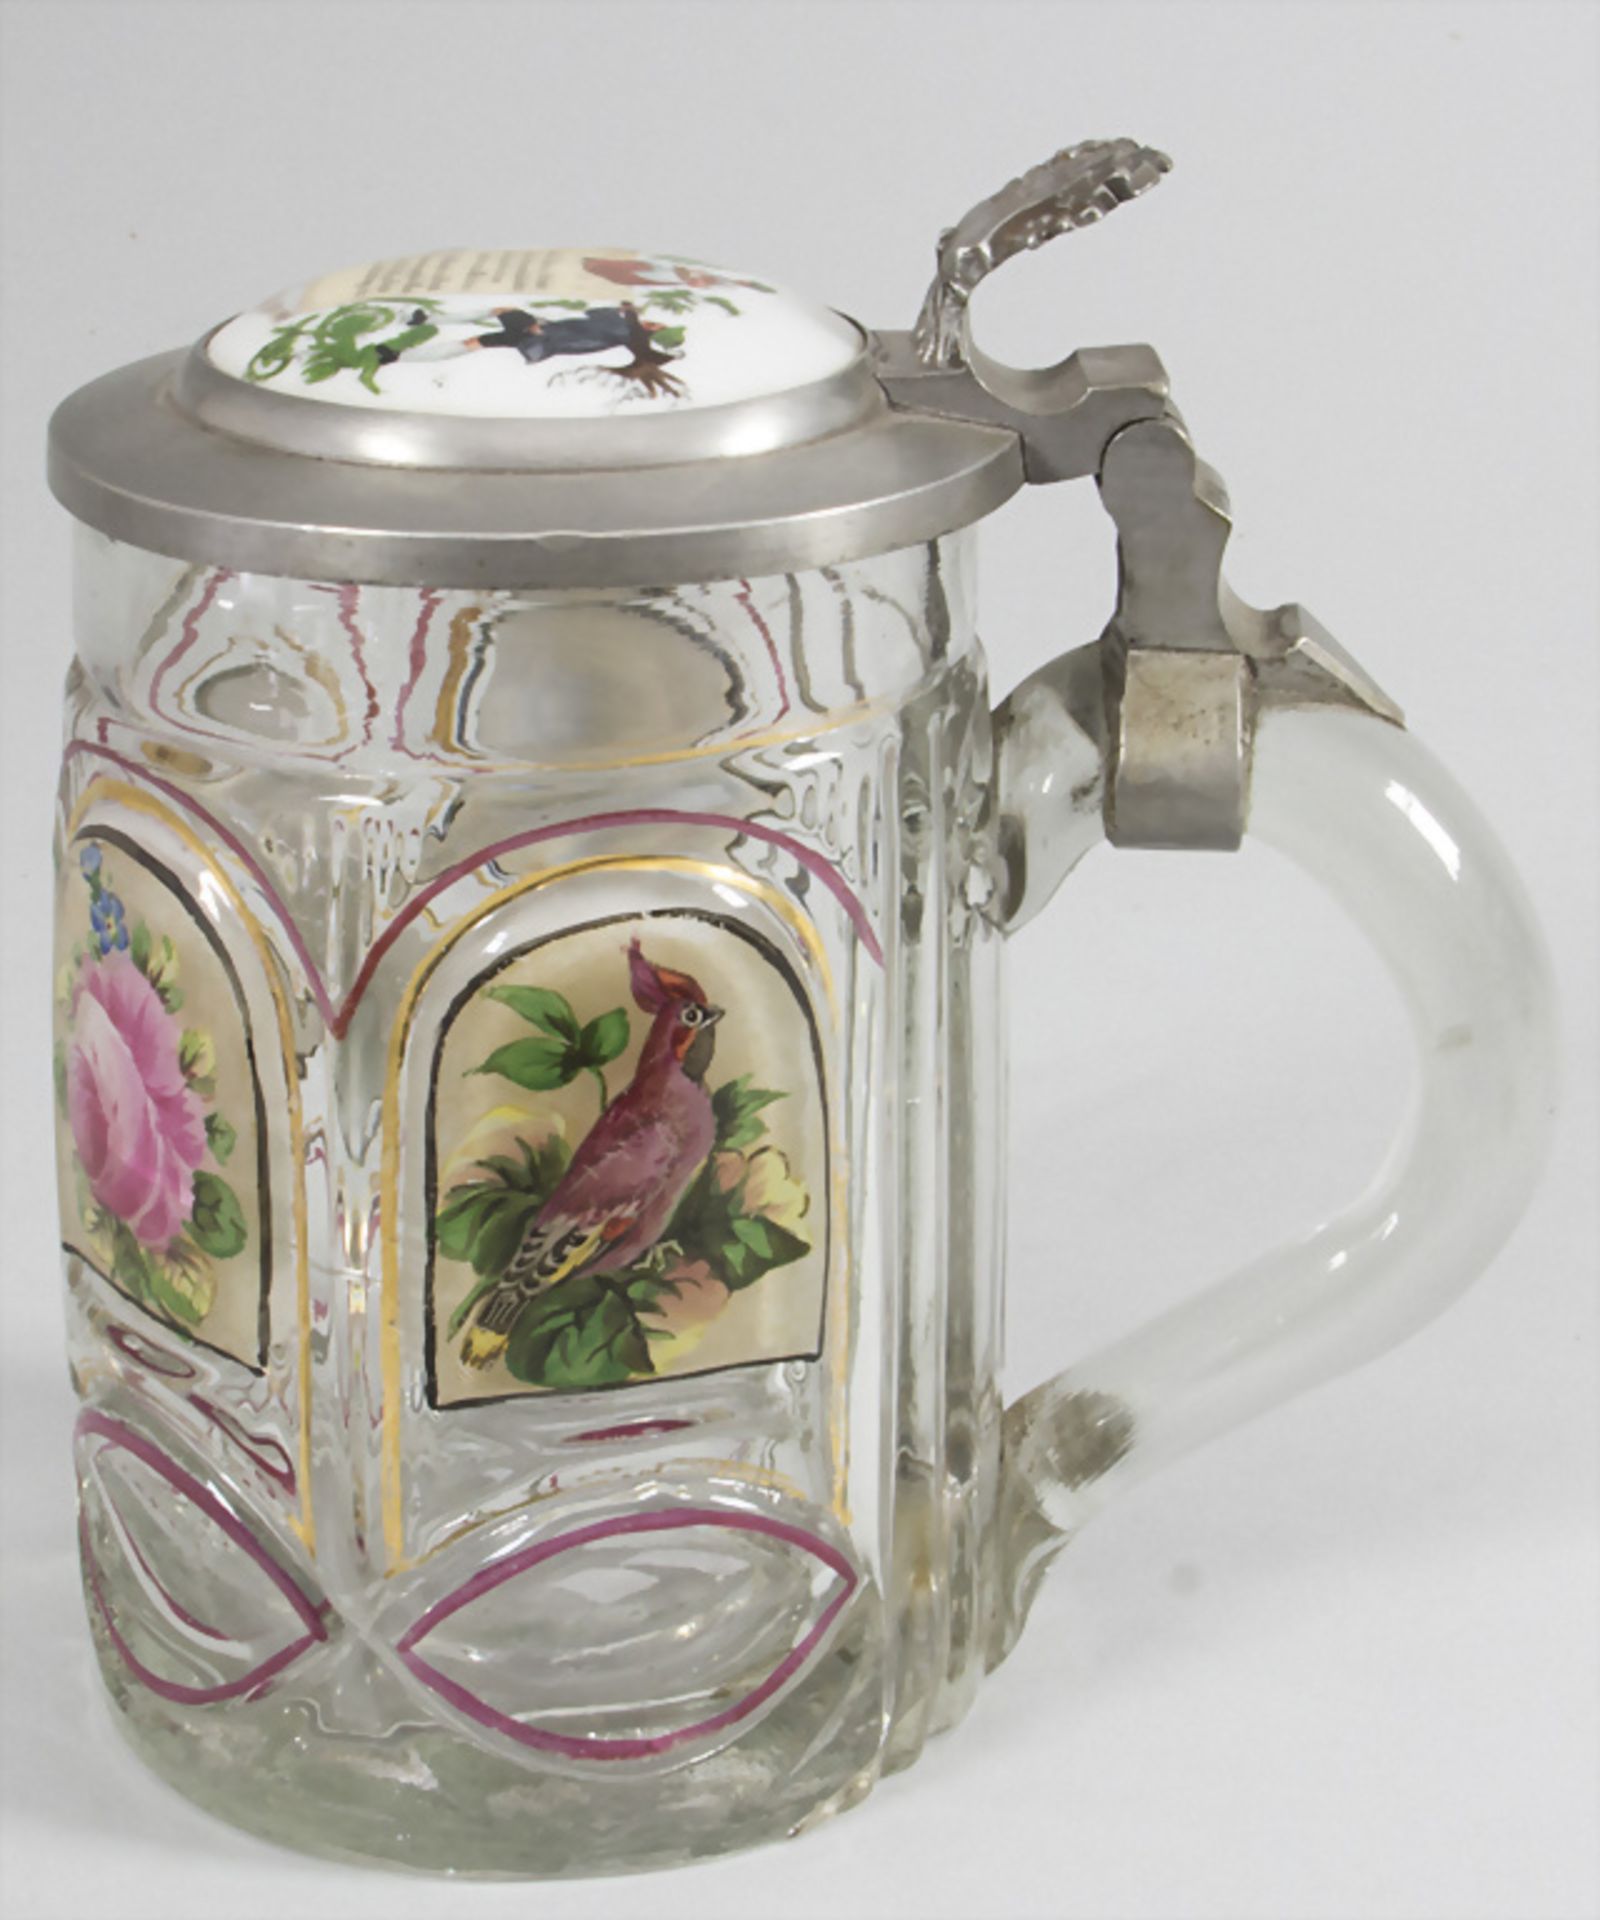 Glaskrug mit Figuren, Rosen und Vögeln / A glass jug with figures, birds and roses